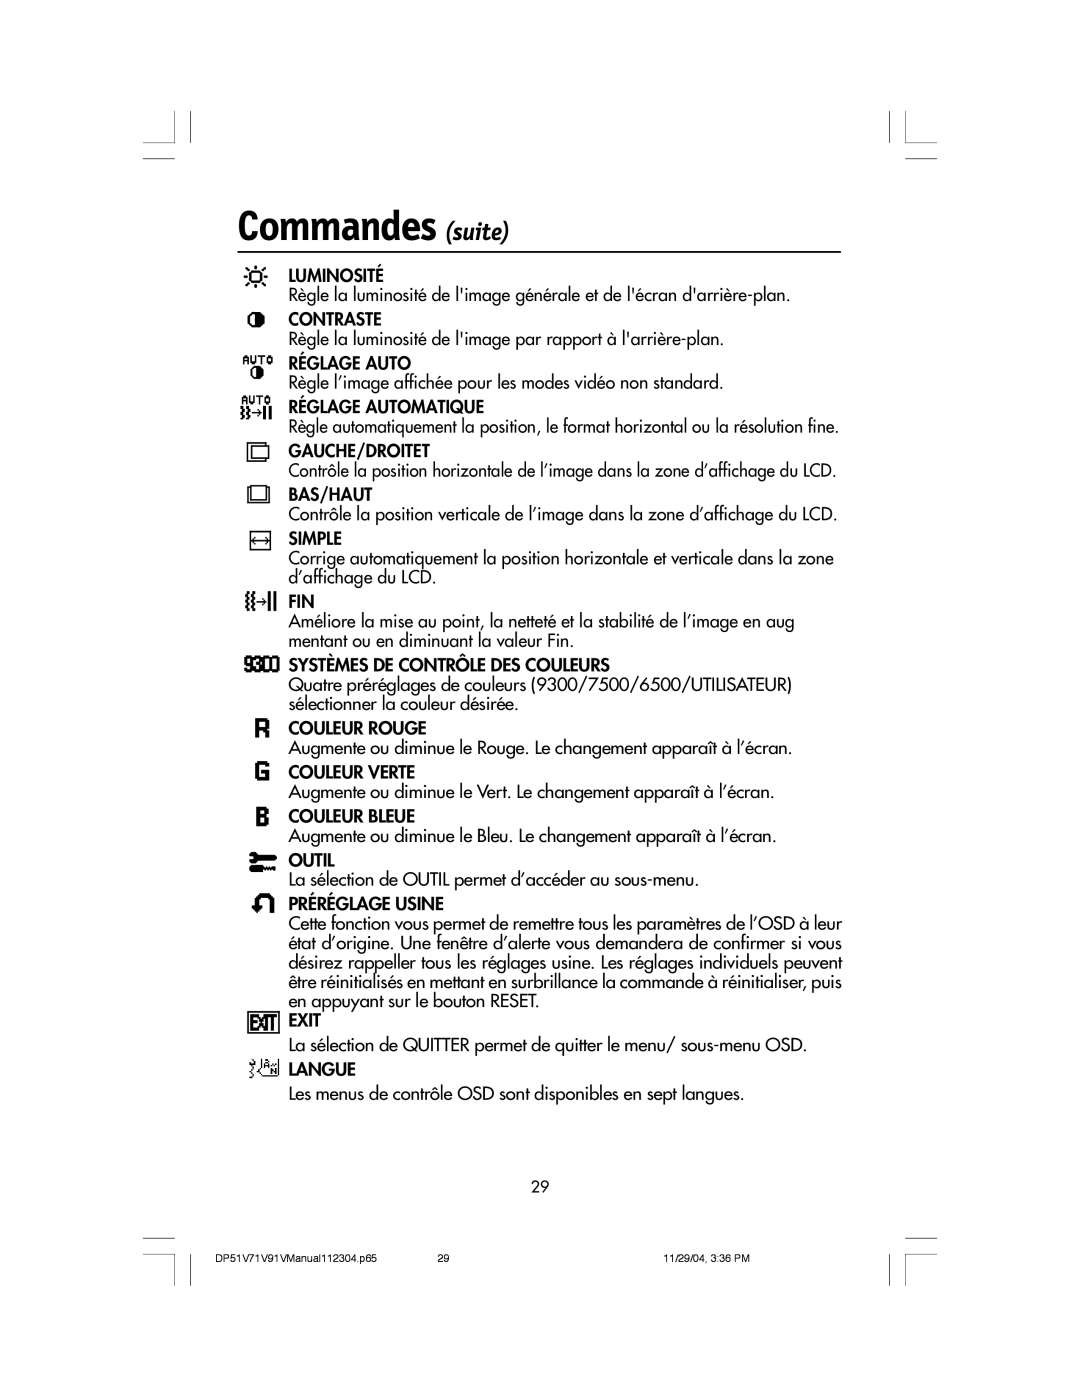 Mitsubishi Electronics V71LCD, V91LCD, V51LCD manual Commandes suite 